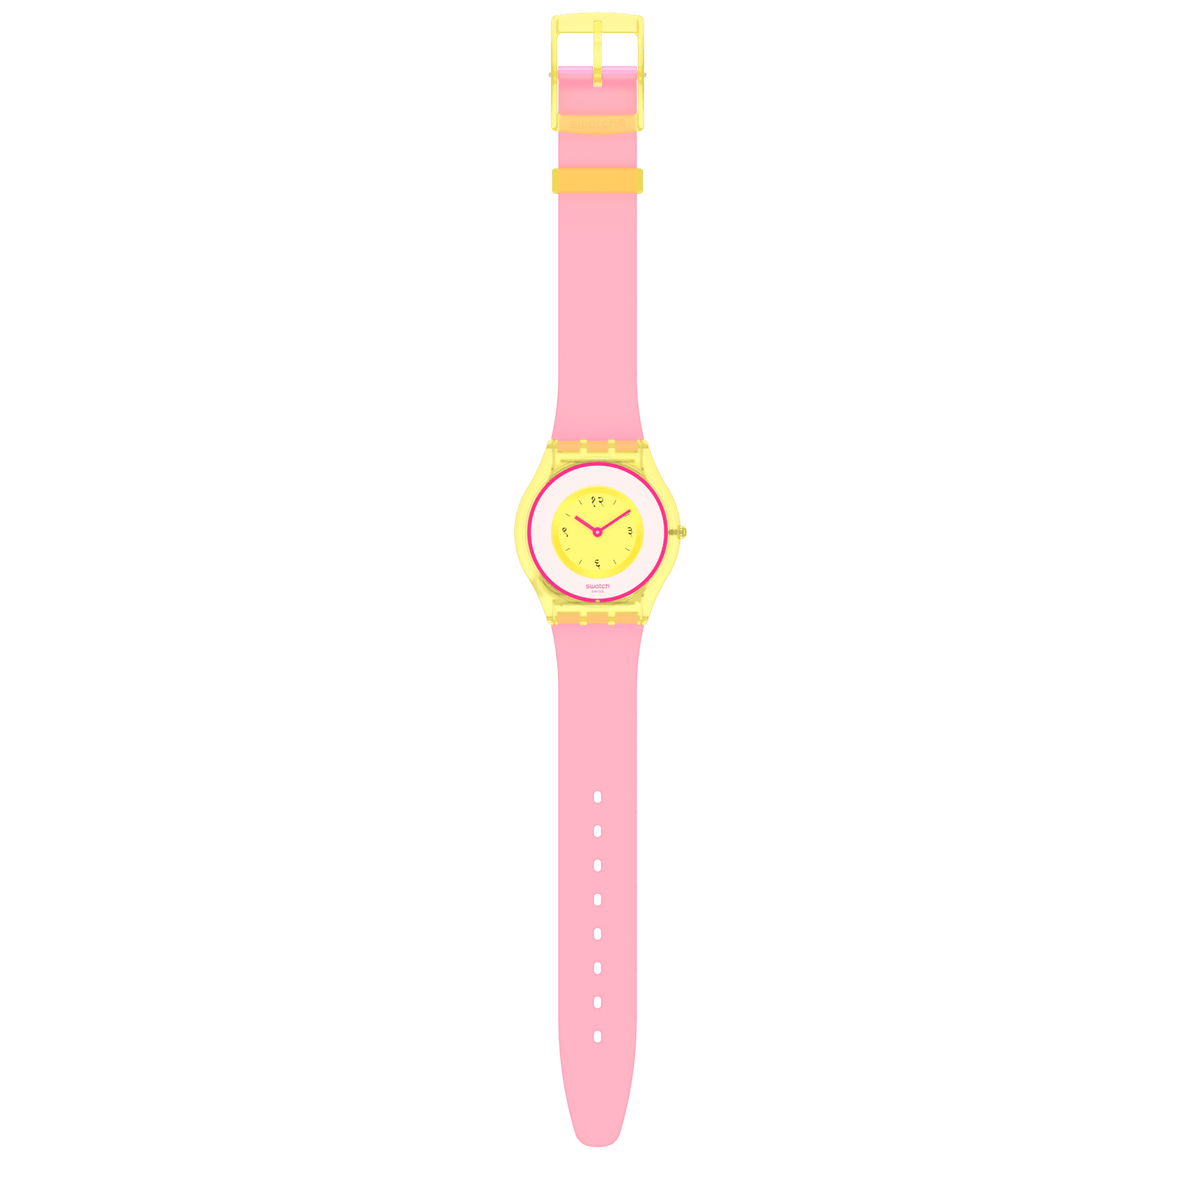 Swatch Skin Watch - India Rose 01